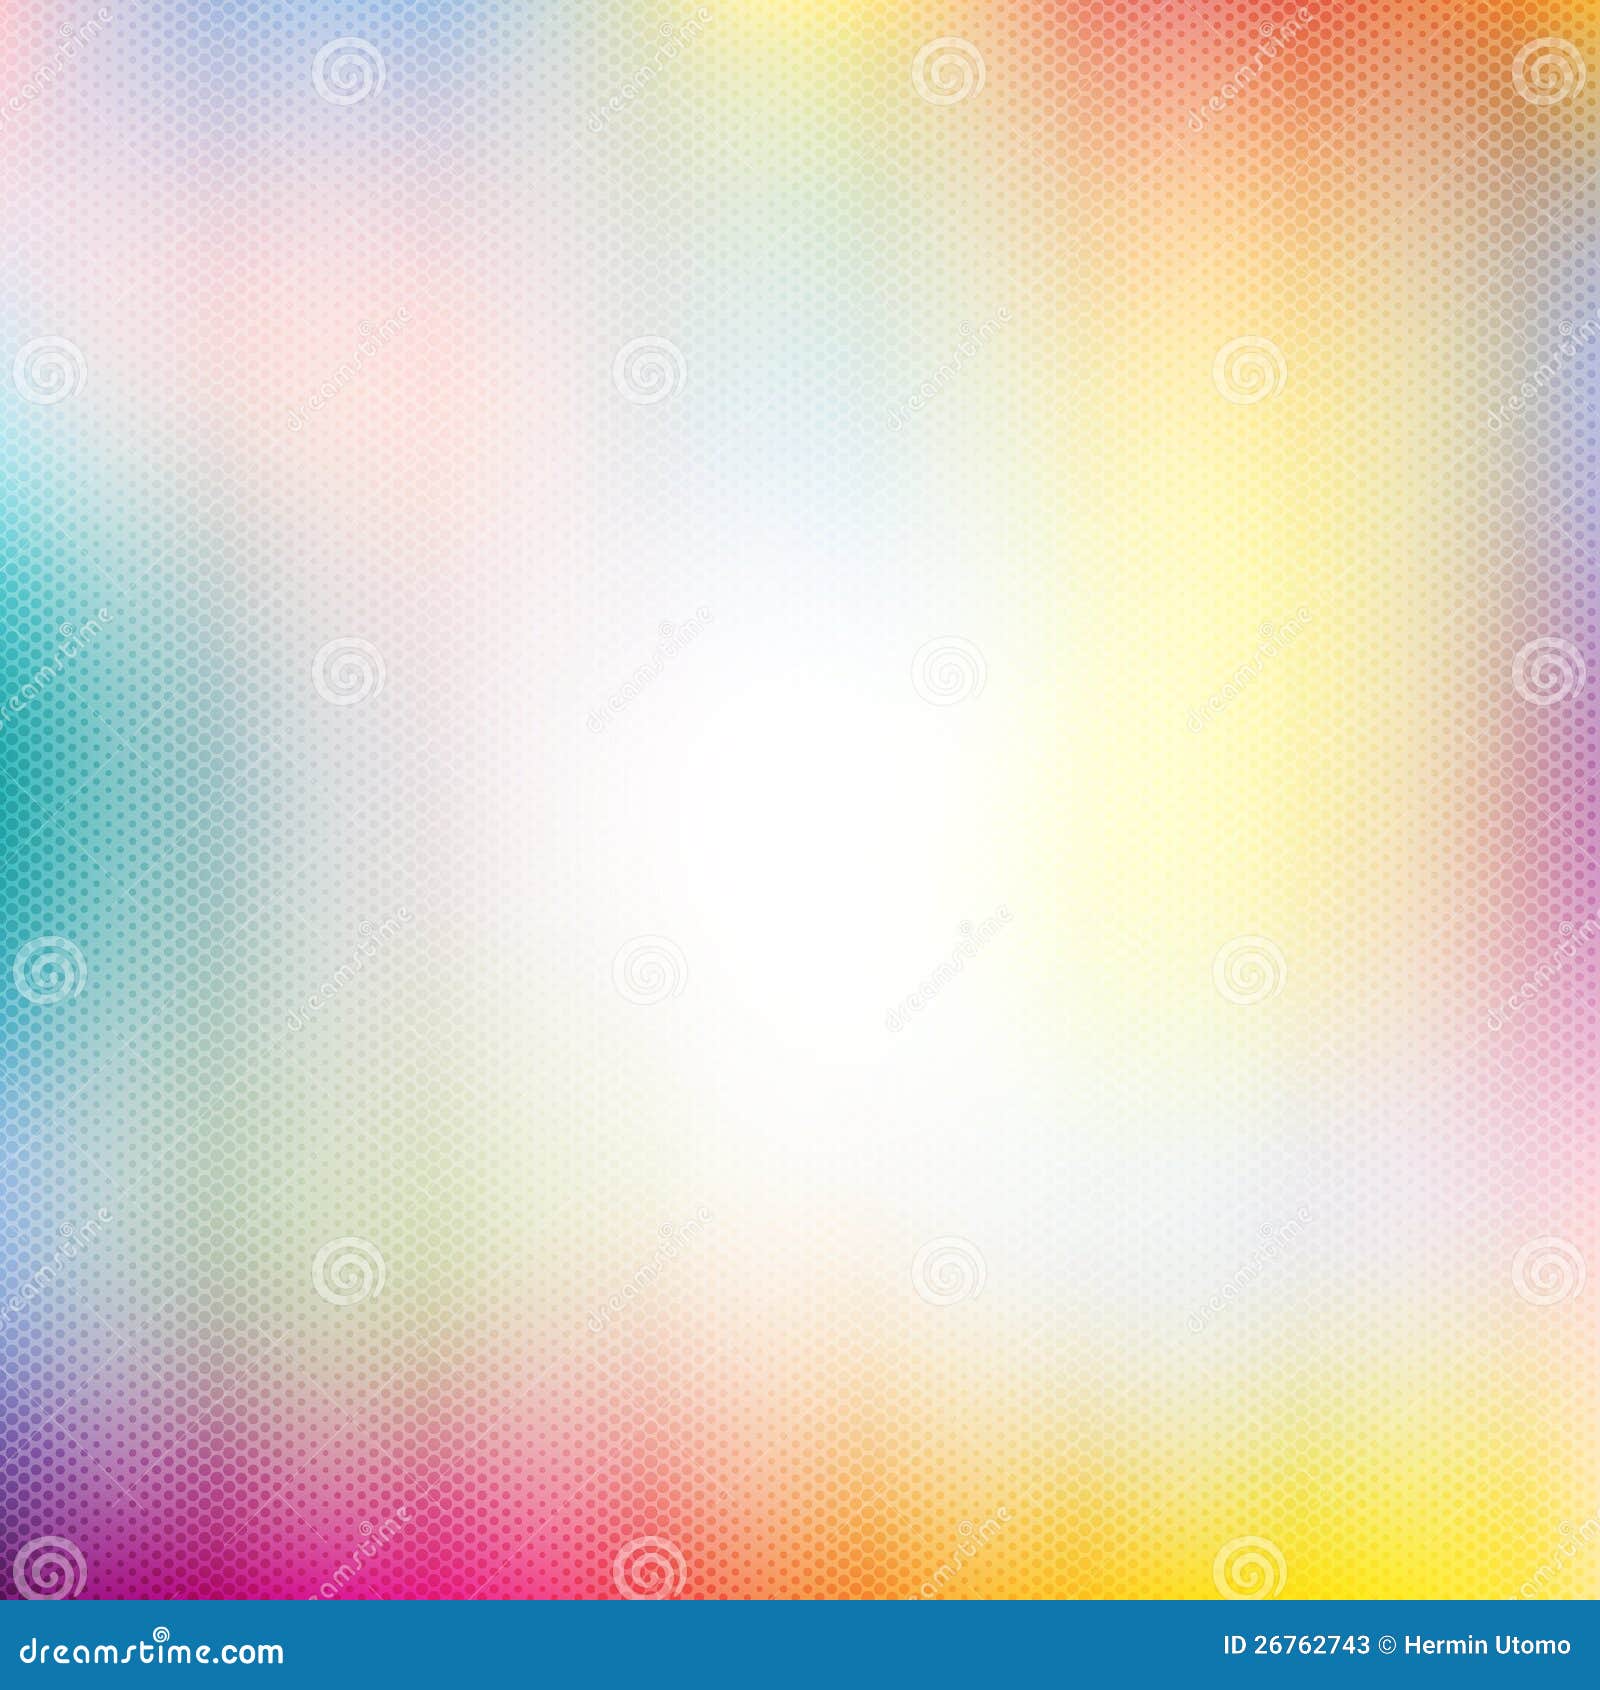 25772264 Light Color Background Images Stock Photos  Vectors   Shutterstock